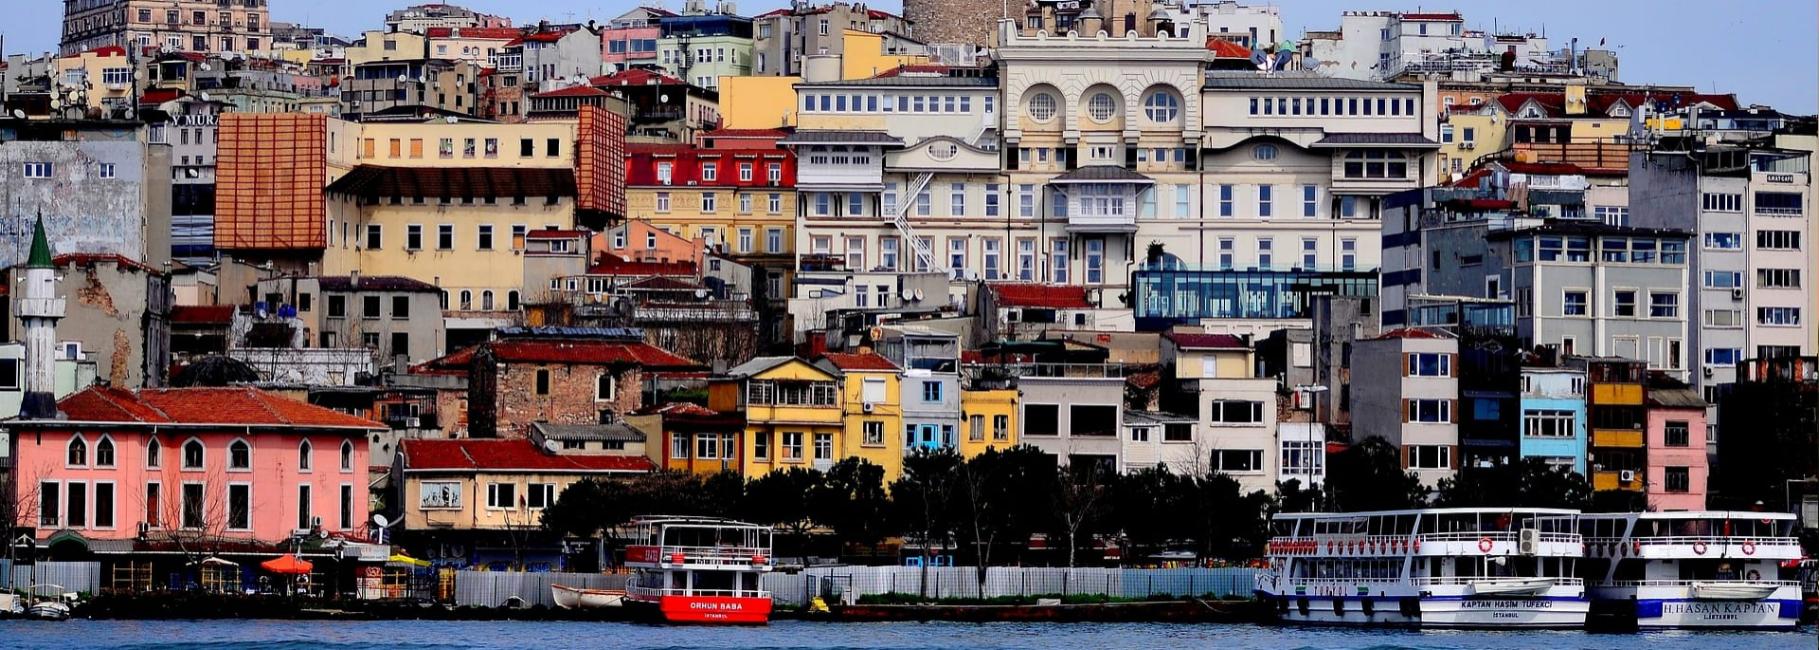 istanbul cultural trip header slk fe